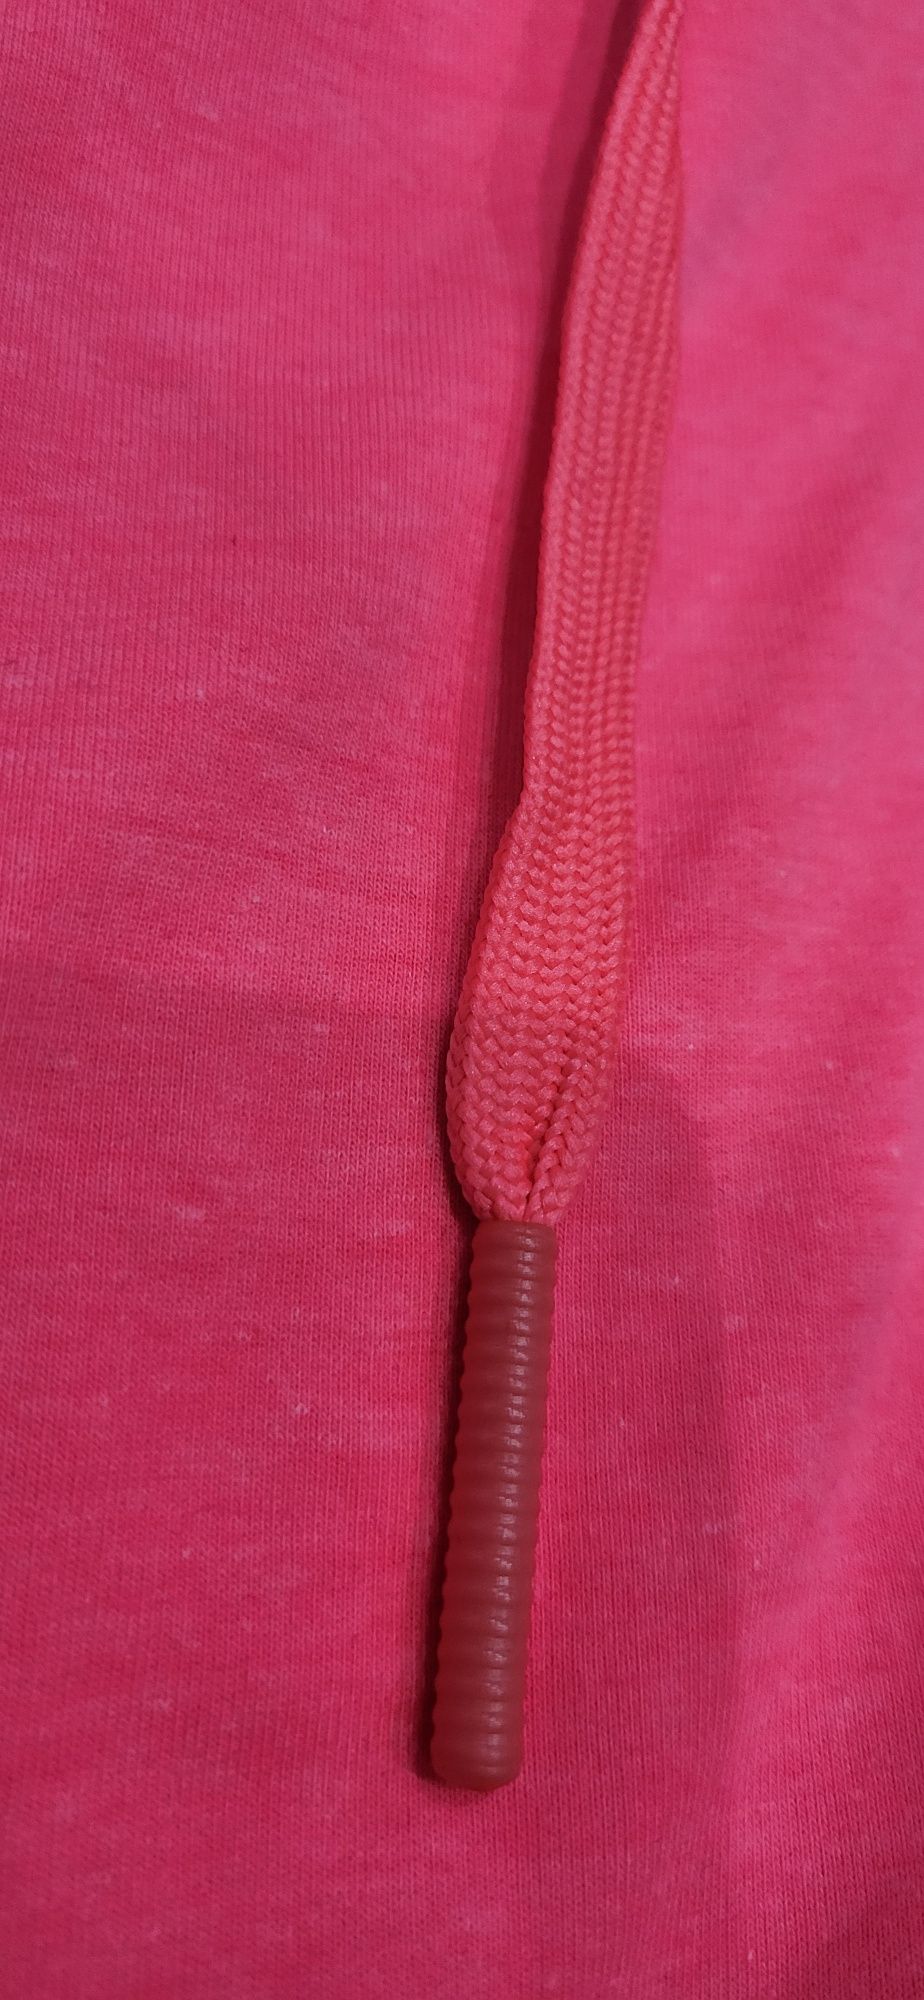 The Nord Face śliczna bluza damska zasuwana kaptur neon róż bawełna M